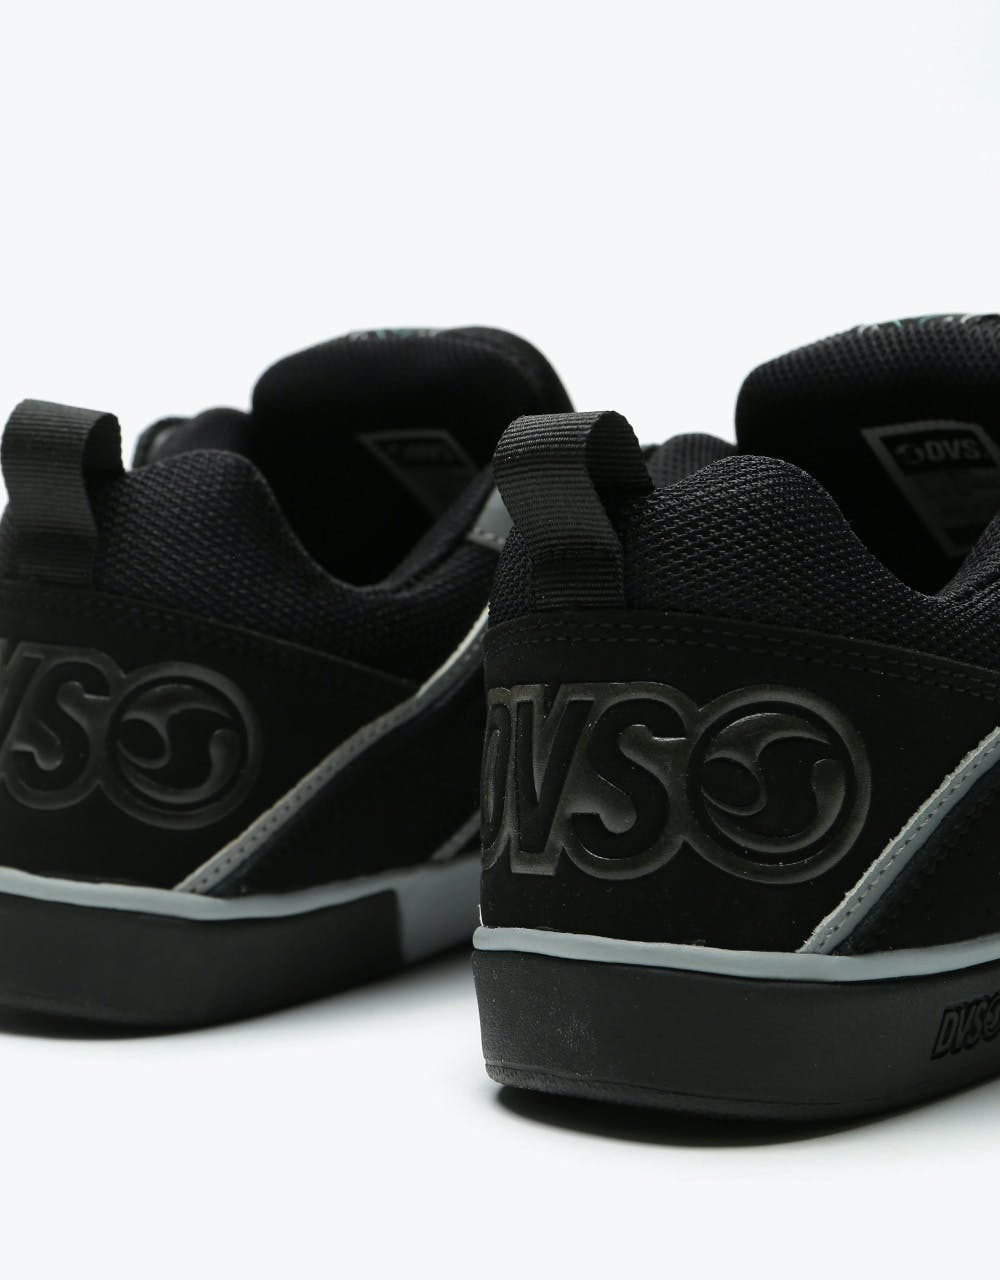 DVS Comanche 2.0 Skate Shoes - Black/Grey/Nubuck